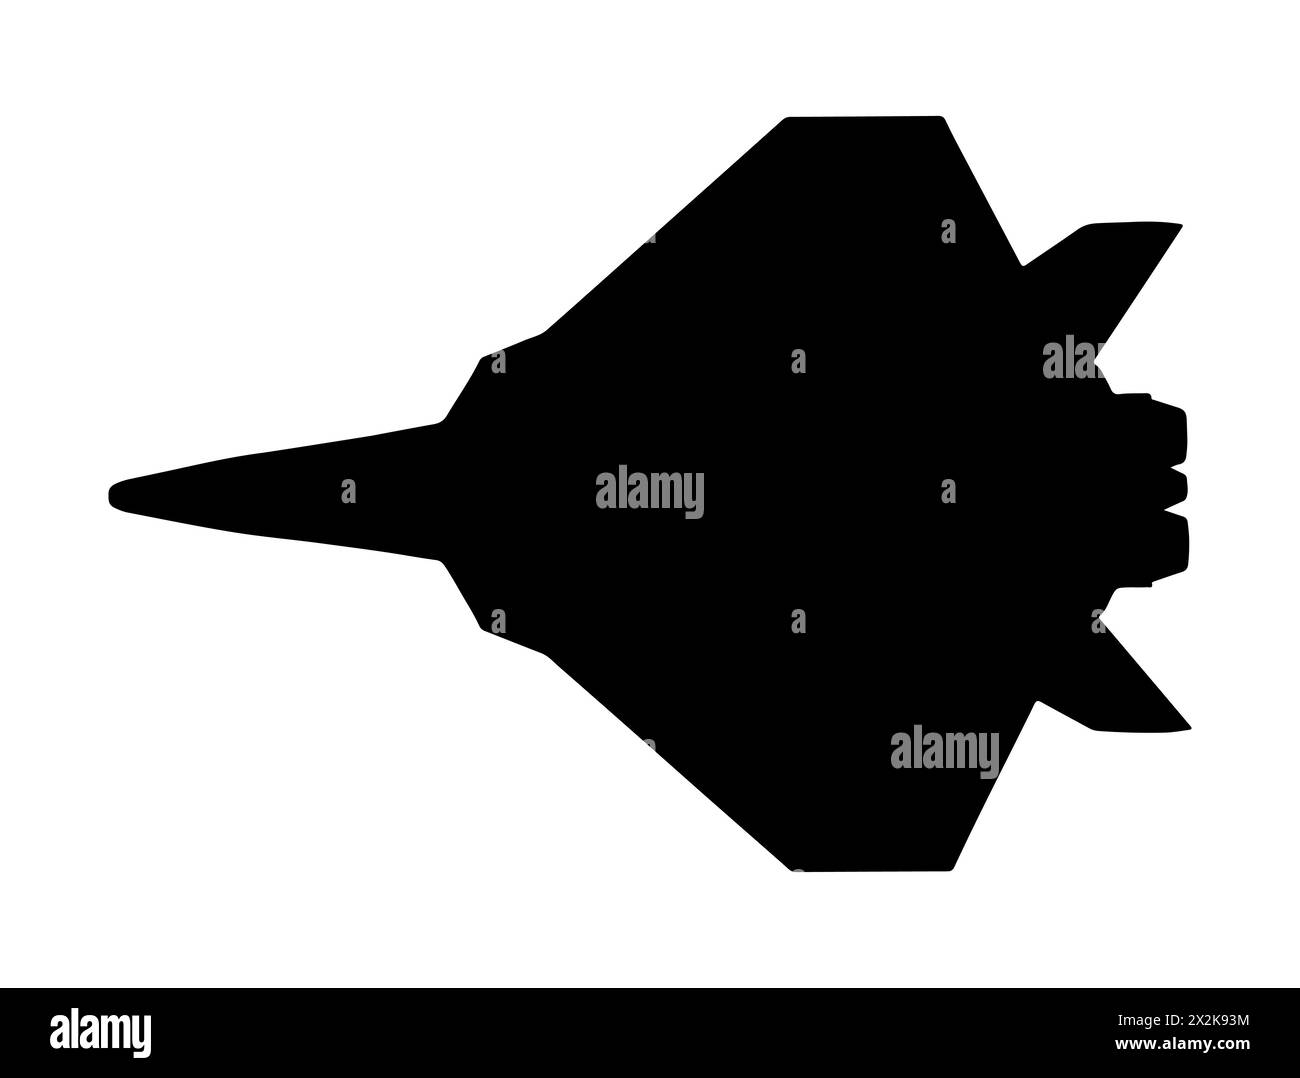 Kampfflugzeug Silhouette Vektorkunst Stock Vektor